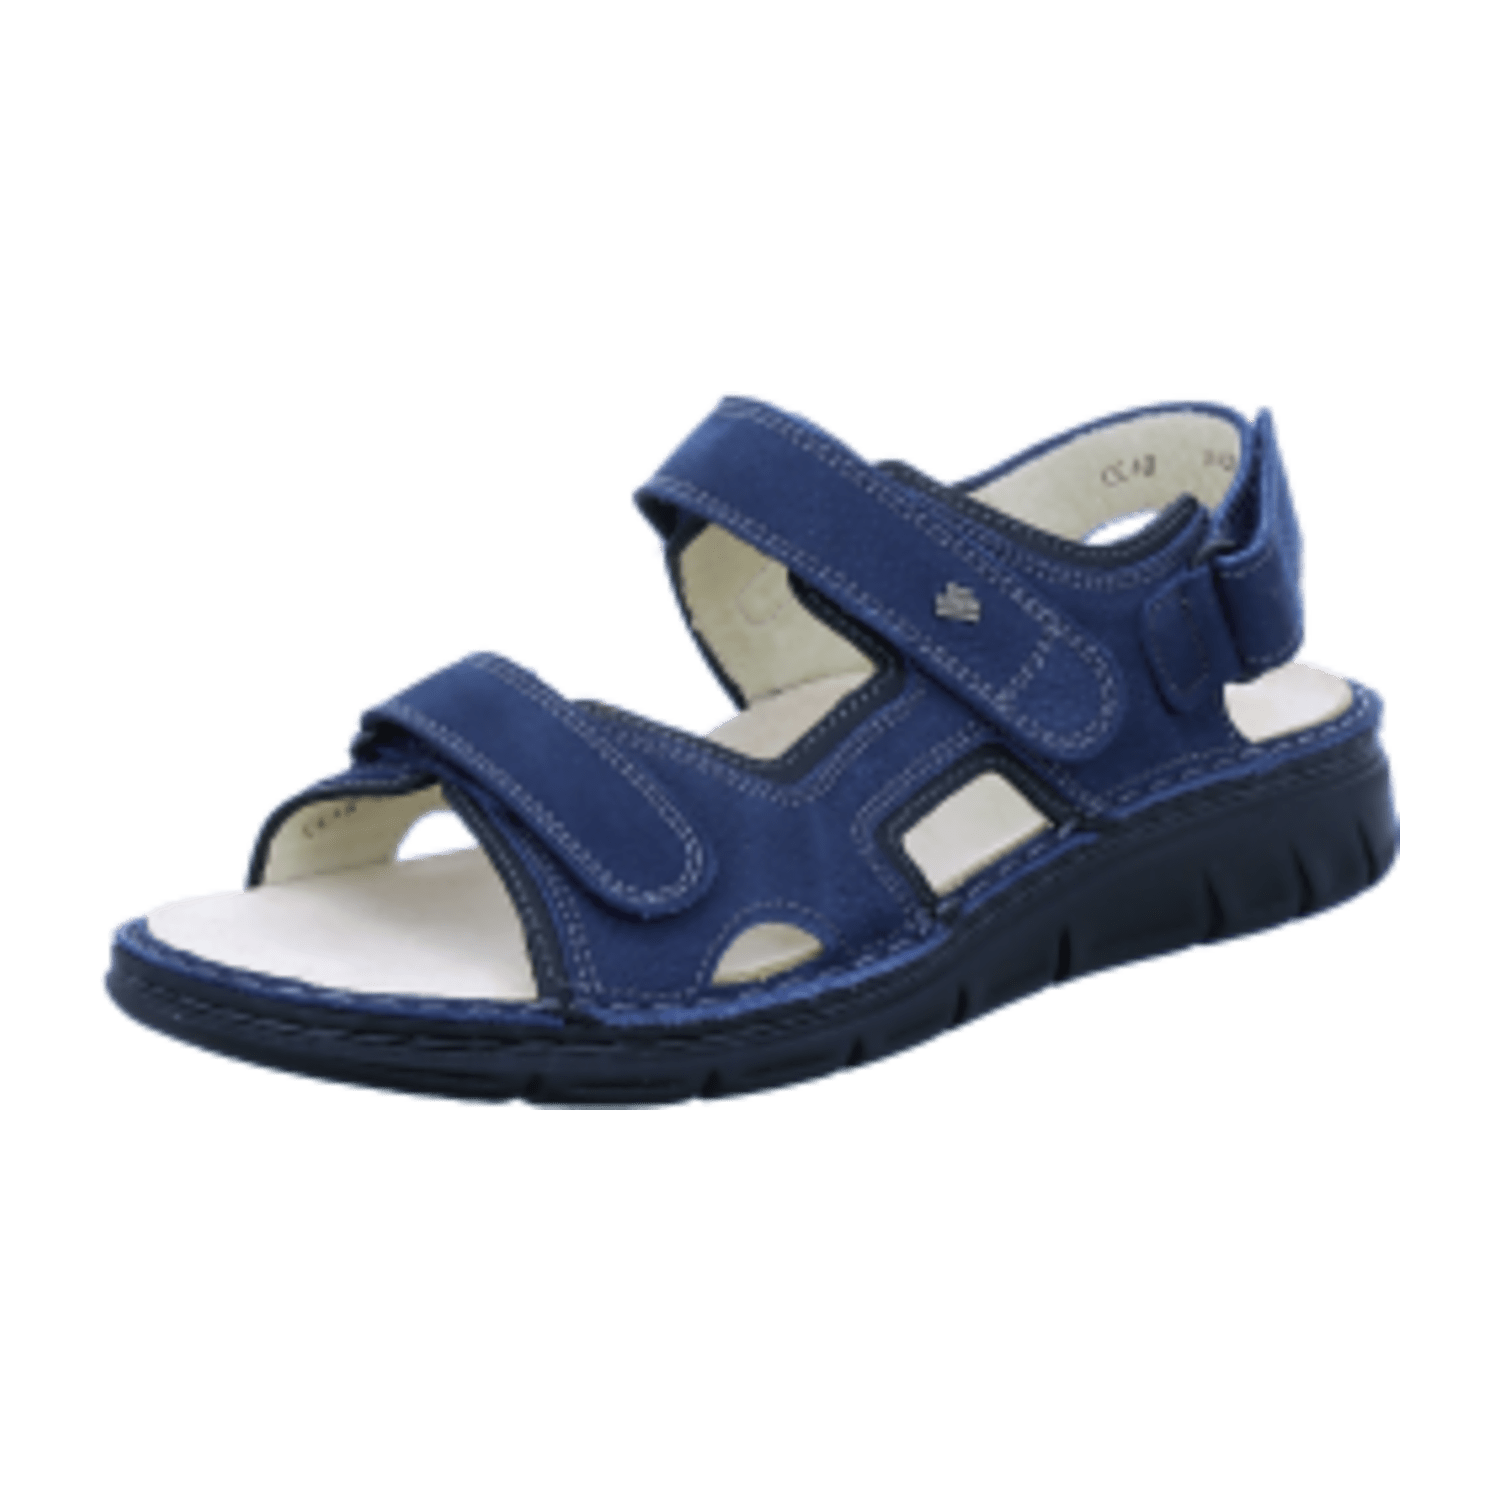 FinnComfort Wanaka-Soft Marine/Schwarz (blau) - Sandale - Herrenschuhe Sandale / Pantolette, Blau, leder (mustang/buggy)